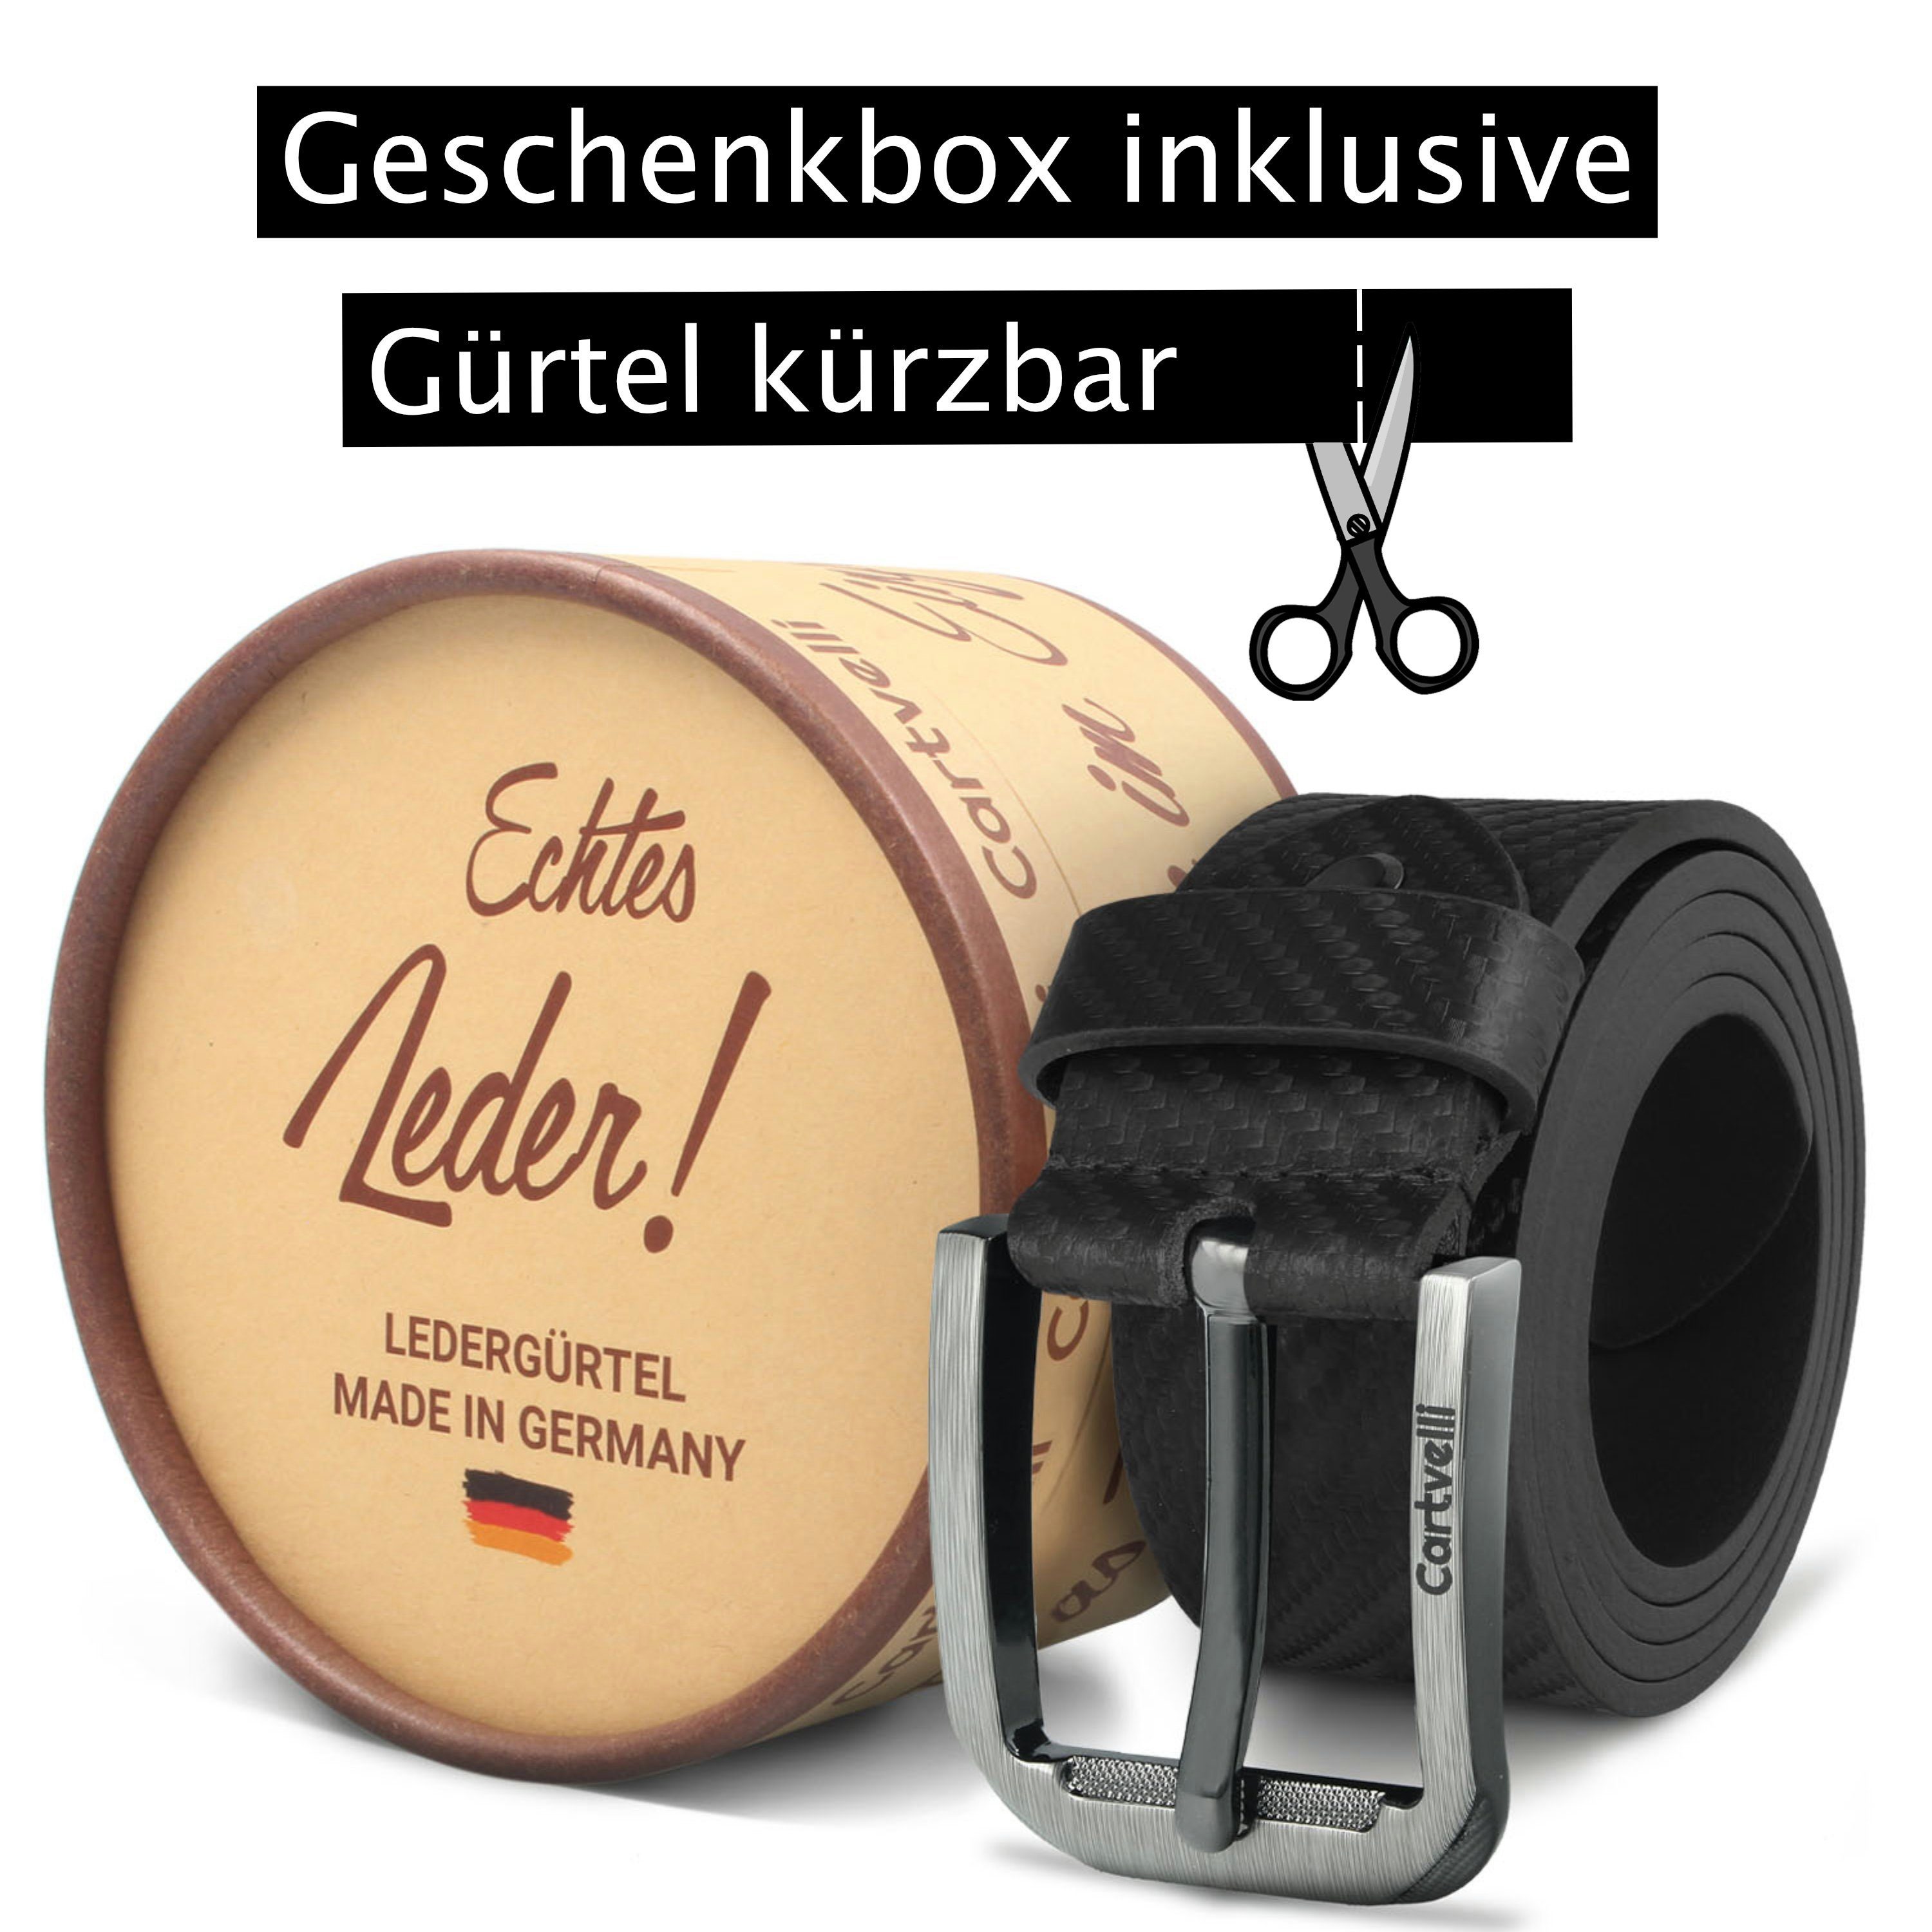 Cartvelli Ledergürtel Geschenkbox wunderbarer Ledergürtel Germany Made Design Schließe in (3 Farben) Herren mit mit edles klassisch Carbon